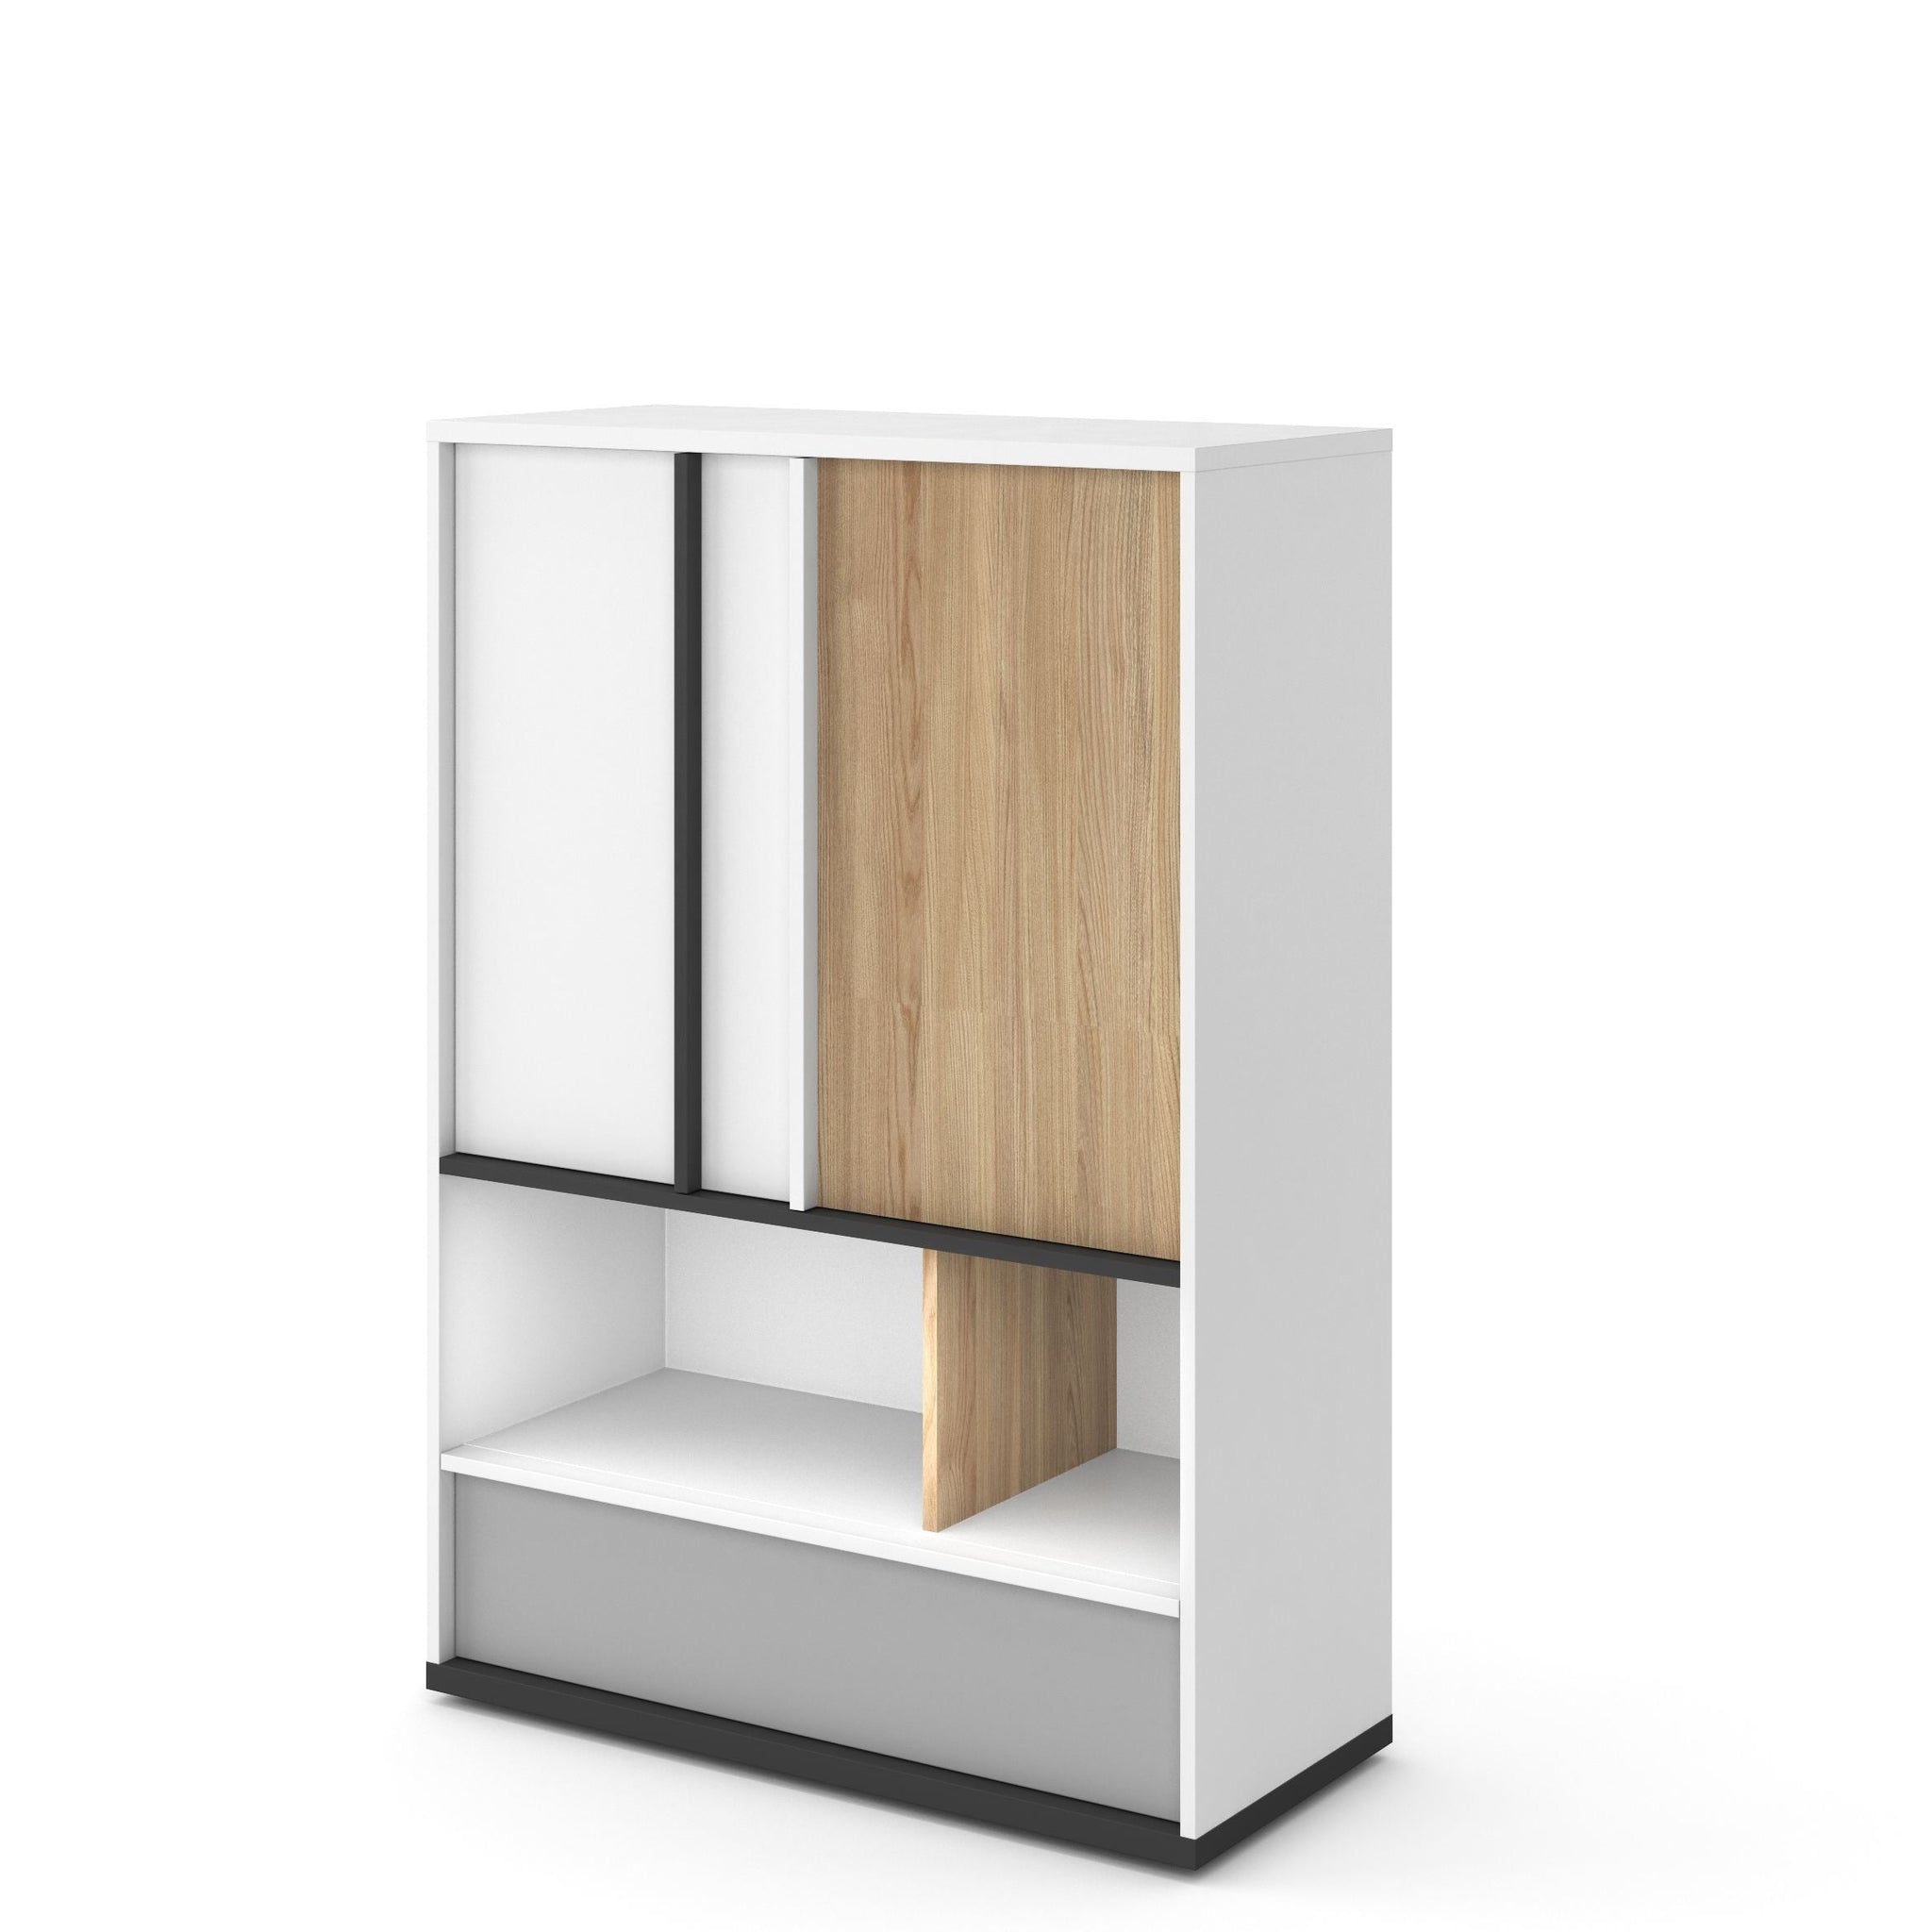 Imola IM-05 Sideboard Cabinet - £180.0 - Kids Sideboard Cabinet 